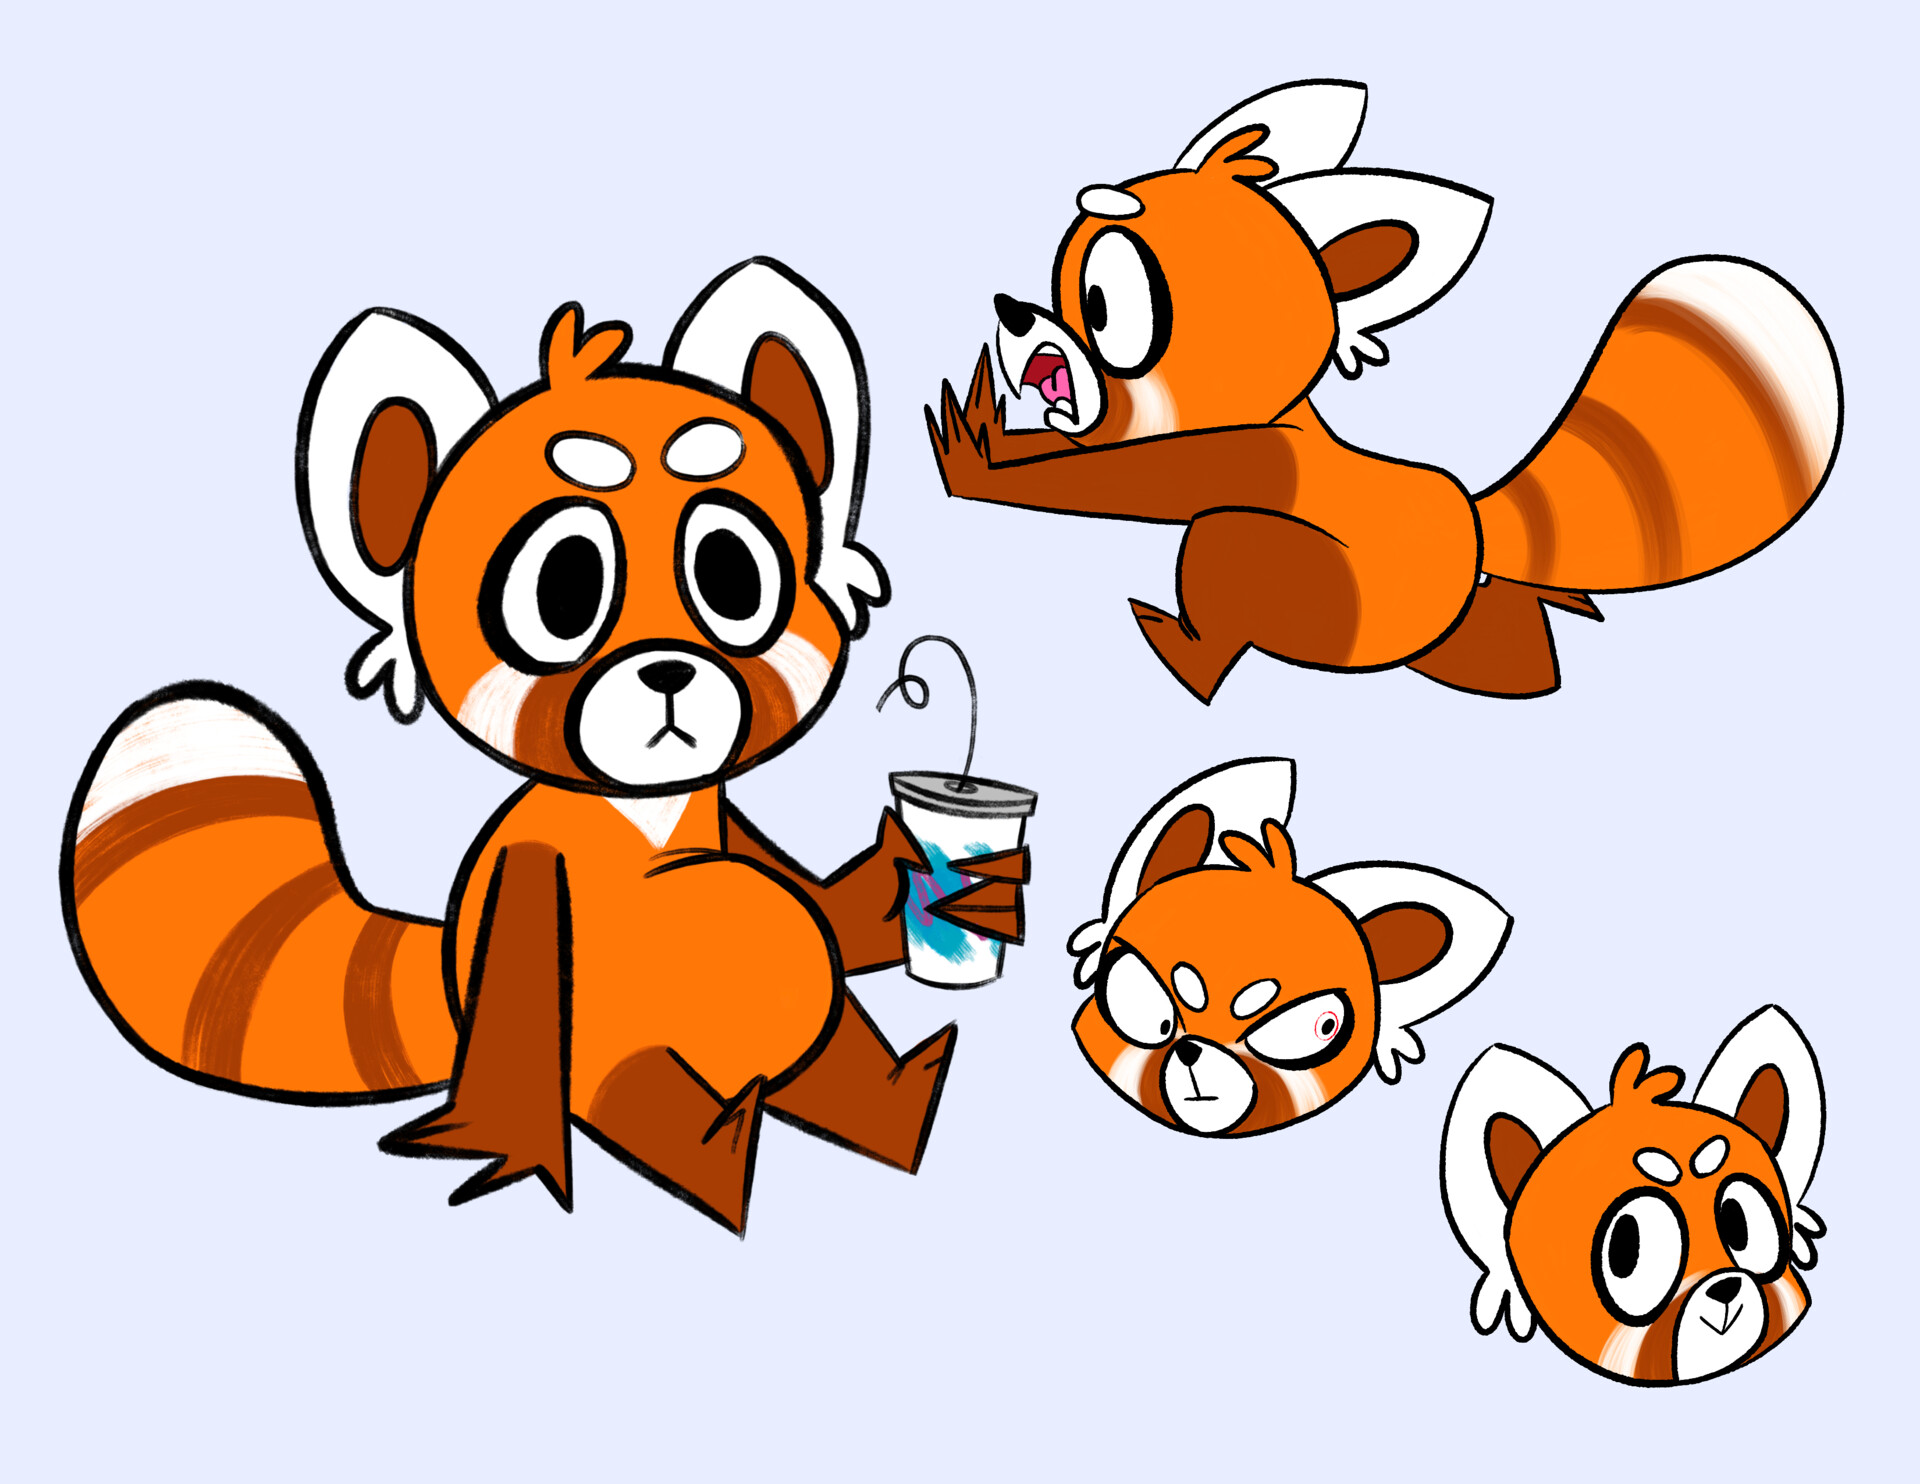 ArtStation - Koi the Red Panda